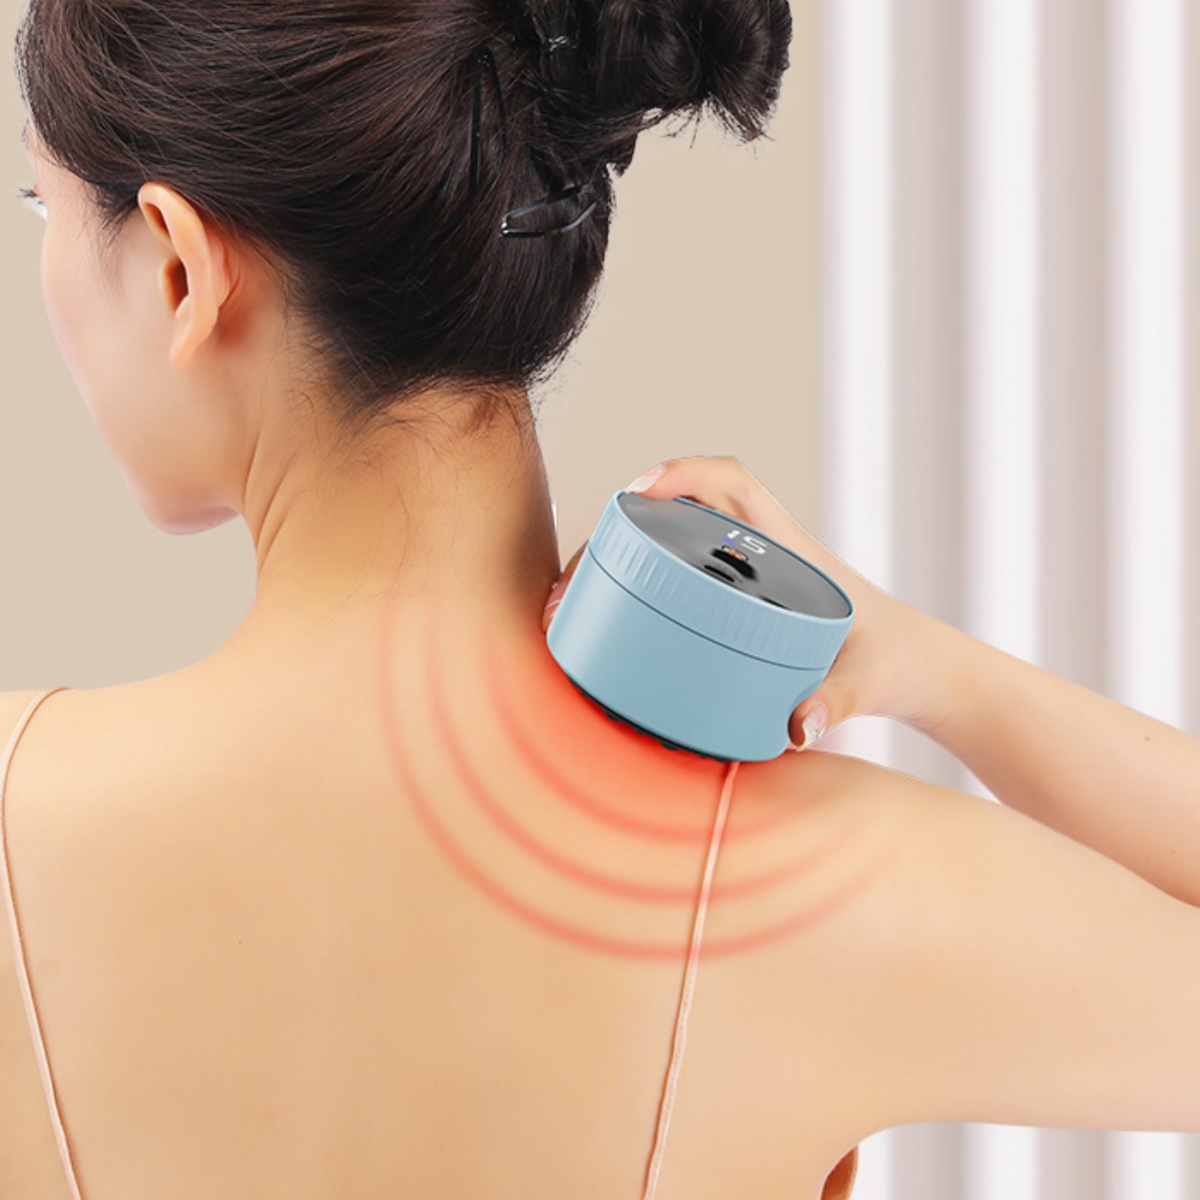 SHAOKE Bluetooth-Lautsprecher Hals Wireless Subwoofer Echo Orange Wearable Portable Wall Massagegerät